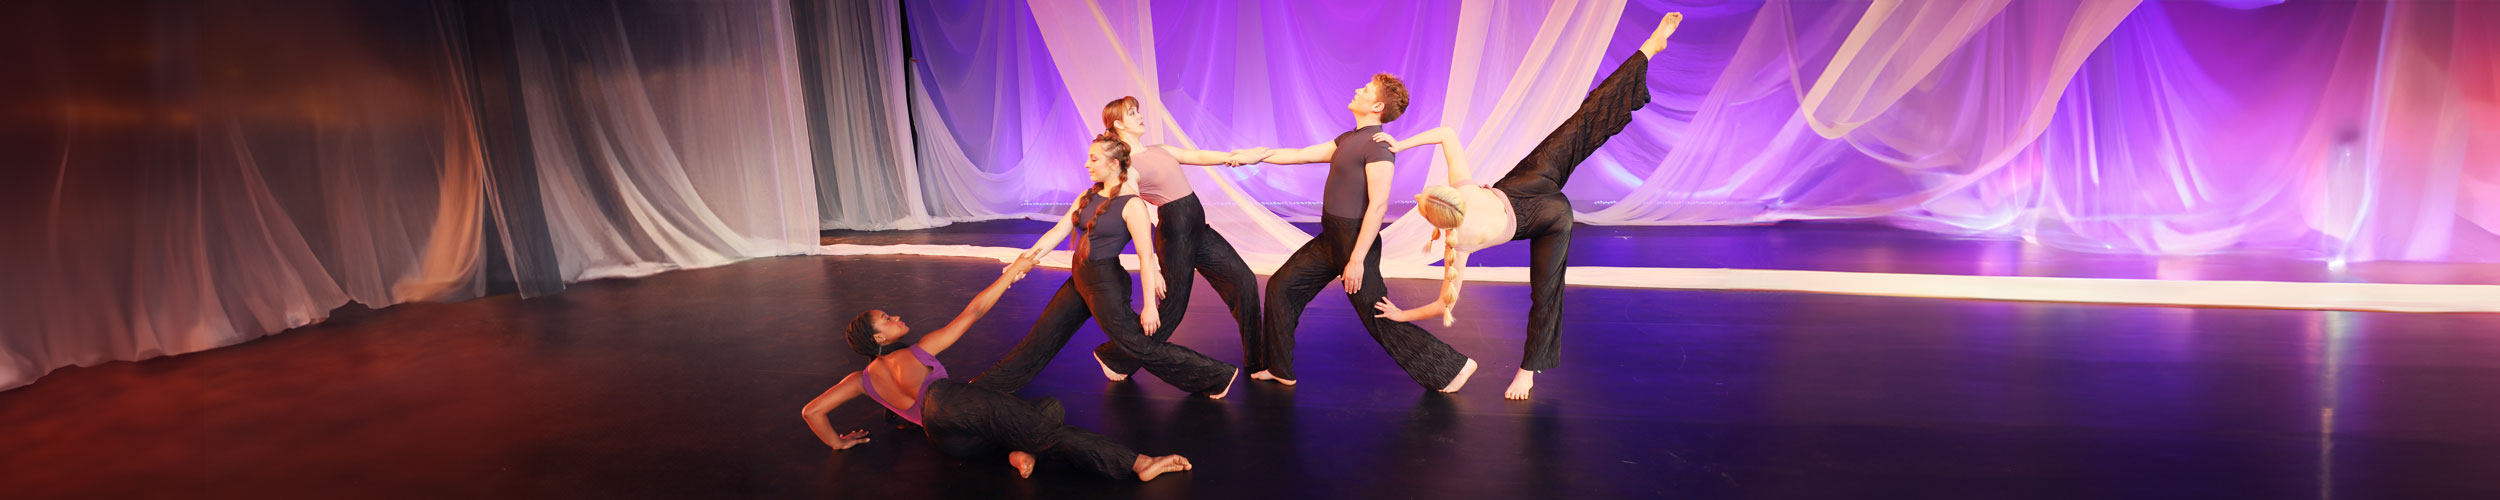 Florida School of the Arts Dance program